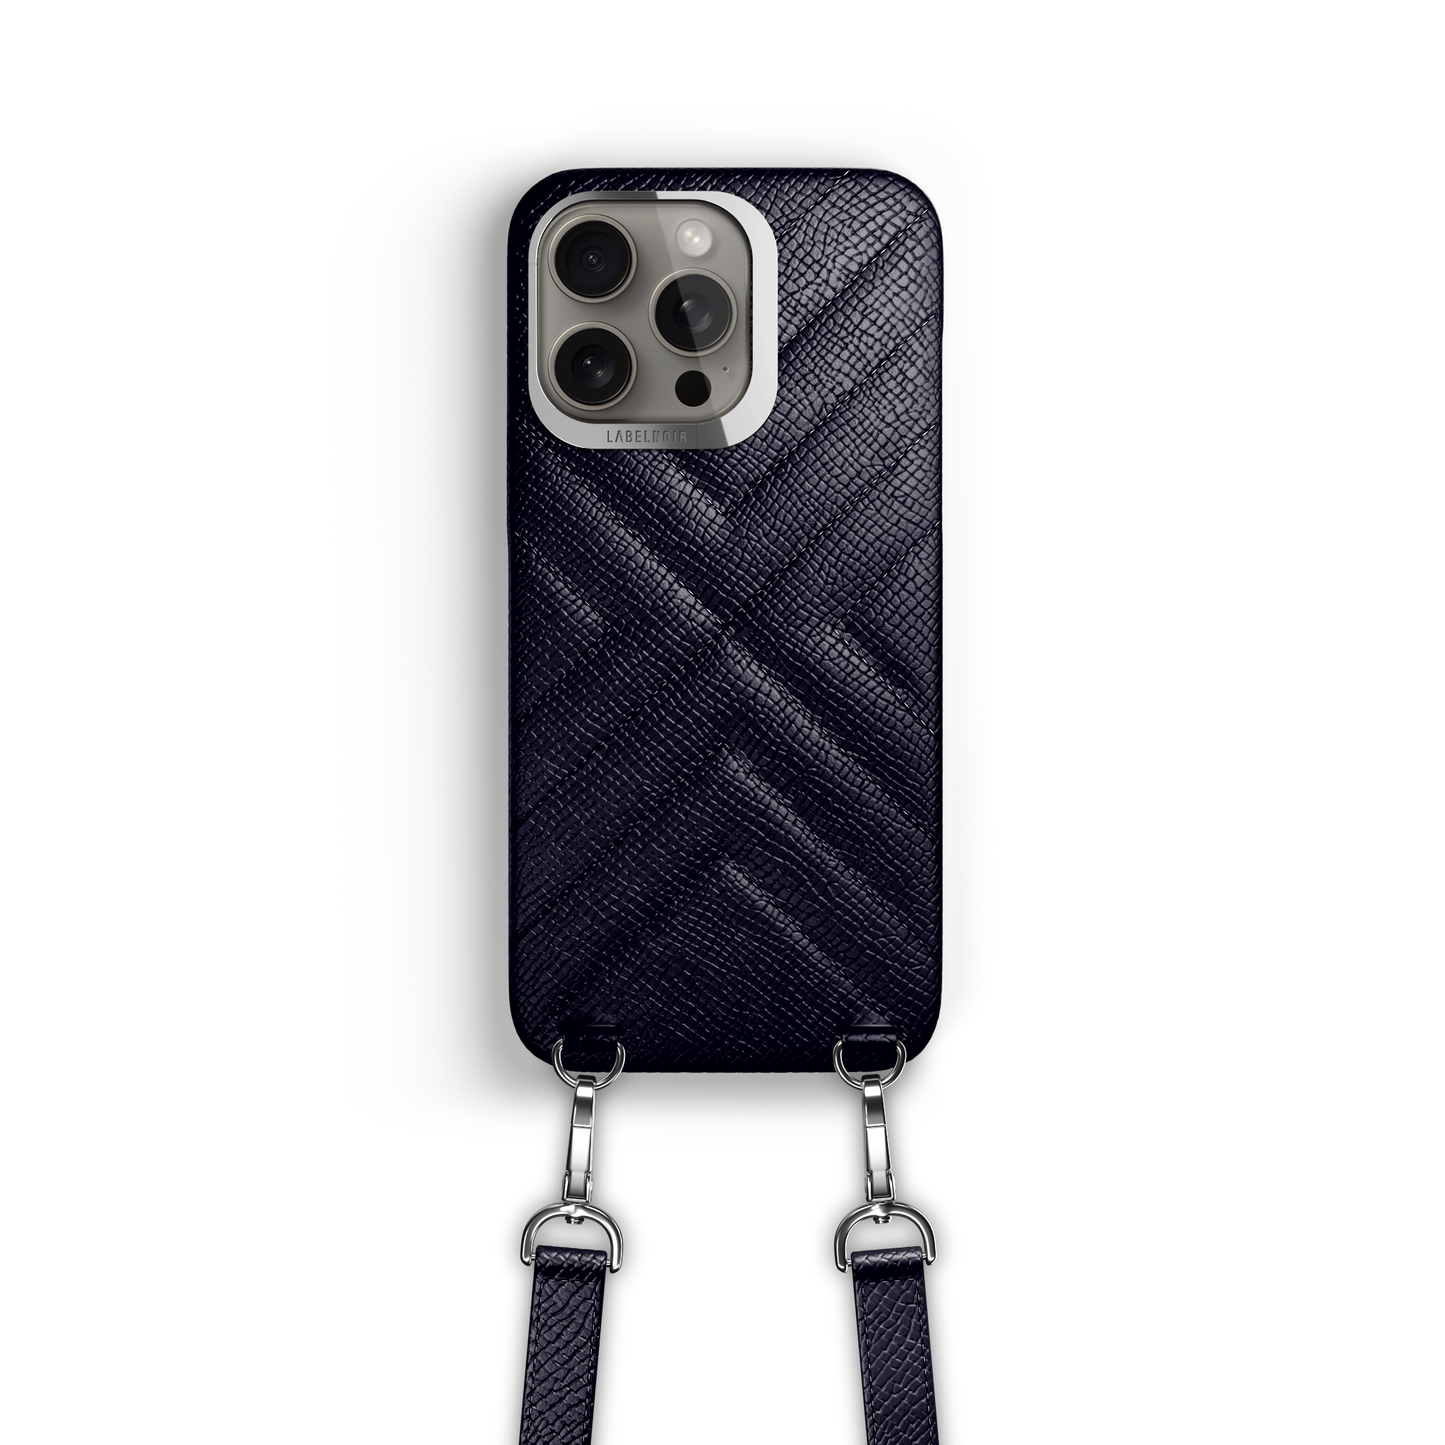 Iphone 15 Pro Quilted Navy Blue Crossbody Case | Label Noir Genève